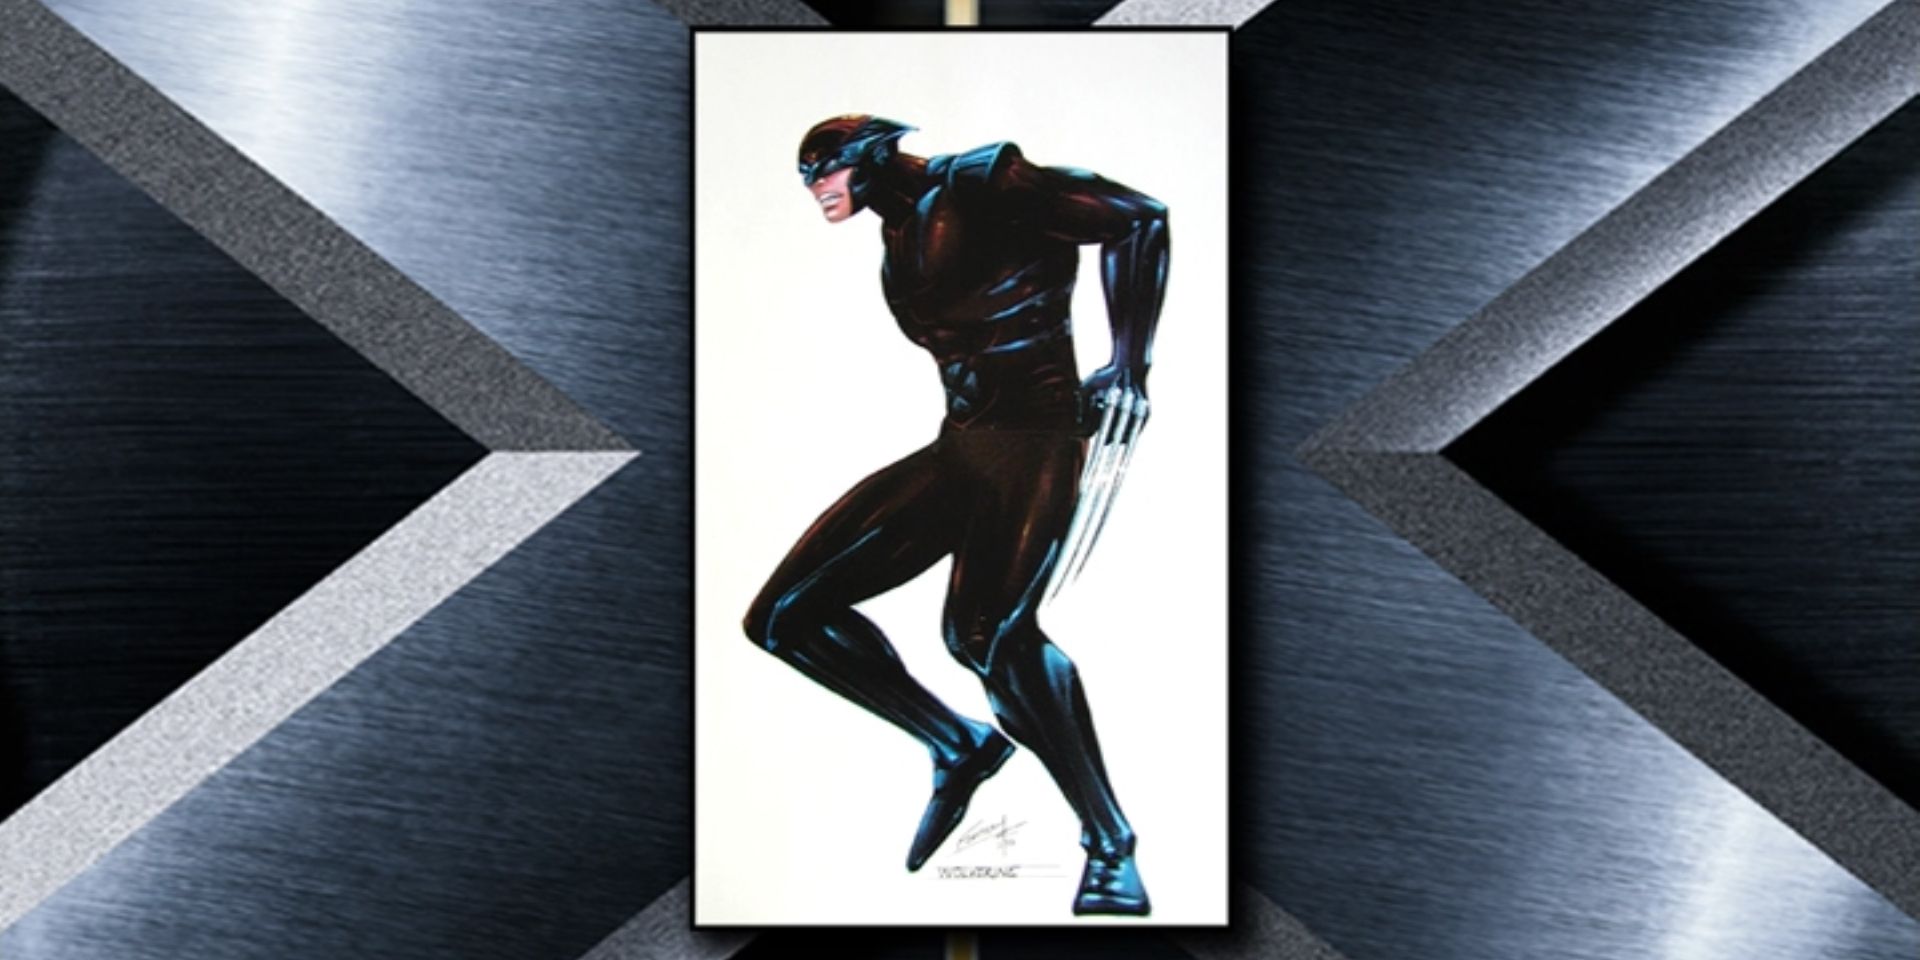 Wolverine concept art for X-Men films